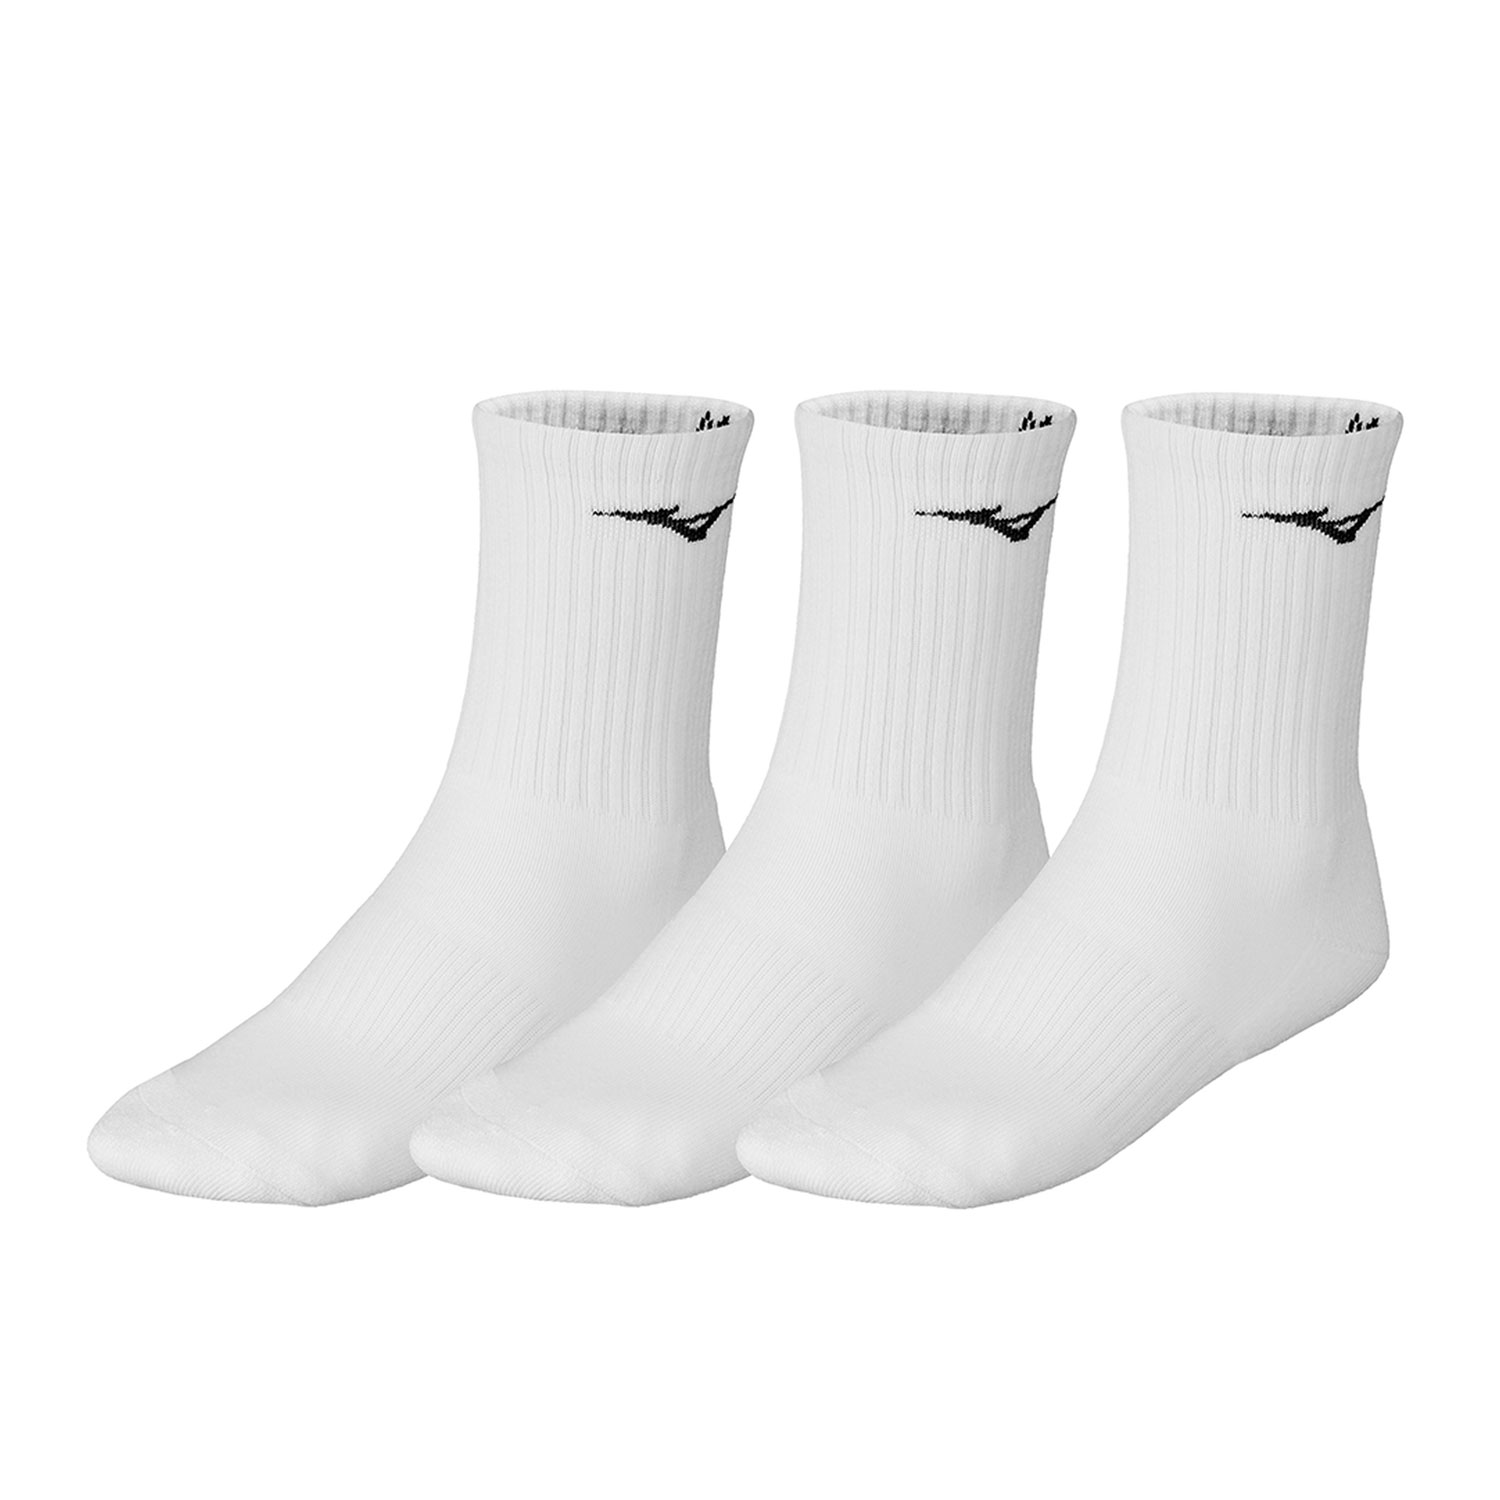 Mizuno Logo x 3 Socks - White